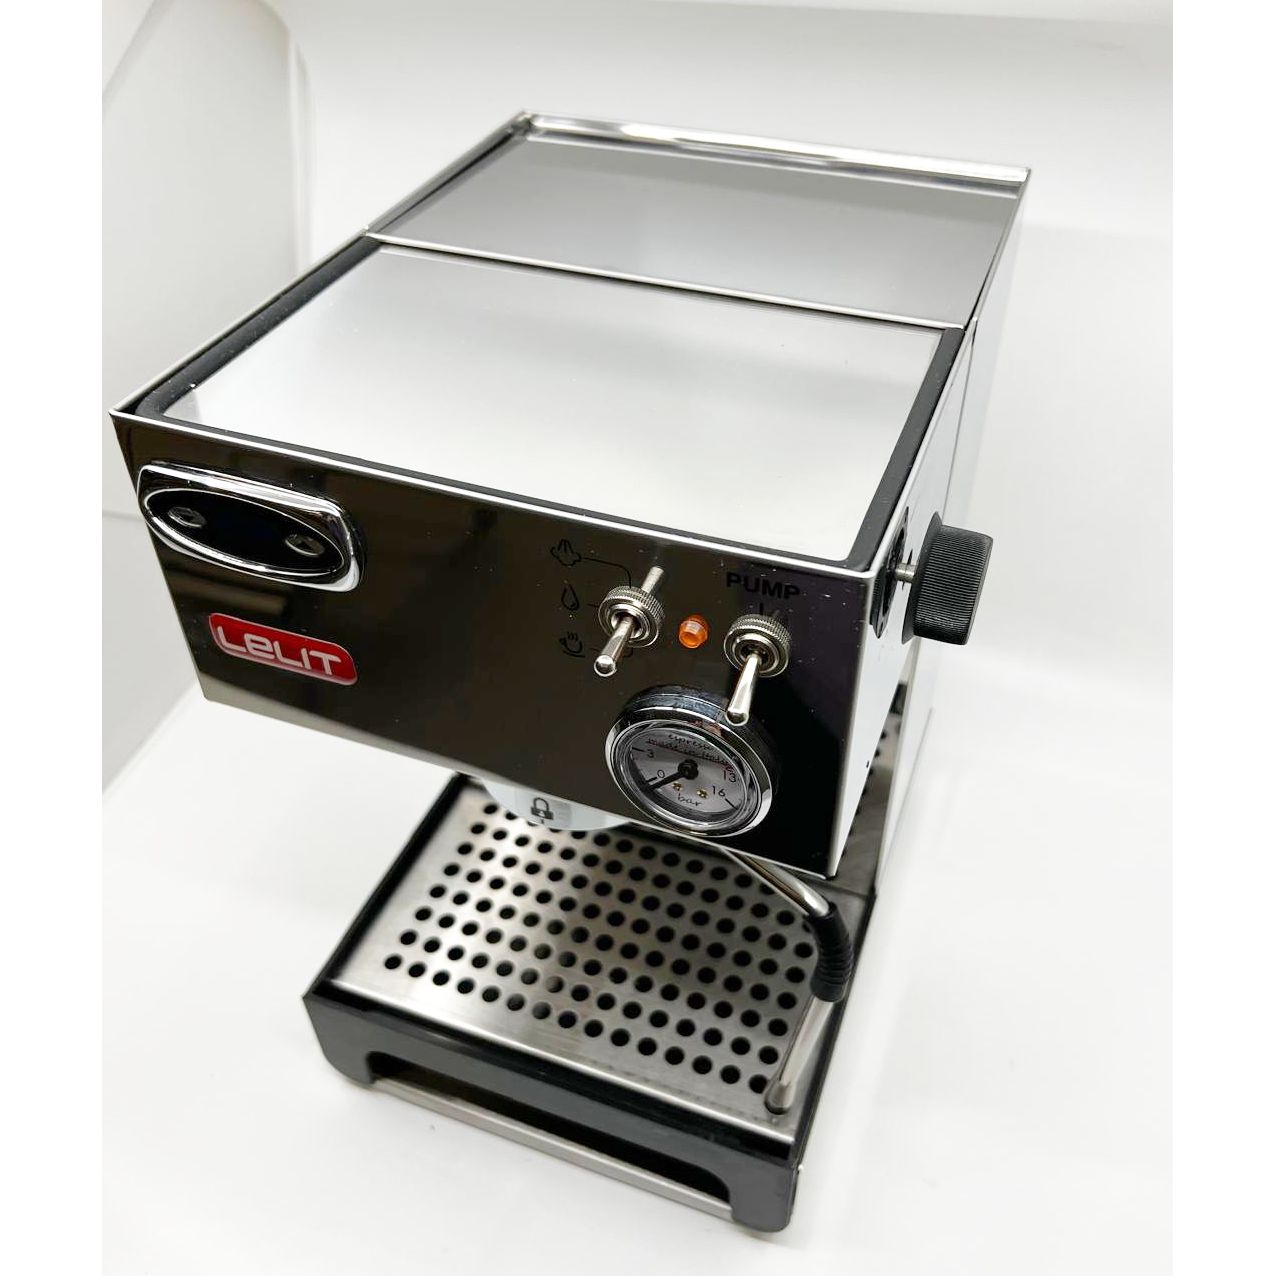 Lelit Anna 2 PL41TEM/110 Espresso Machine PID - Lightly Used Top